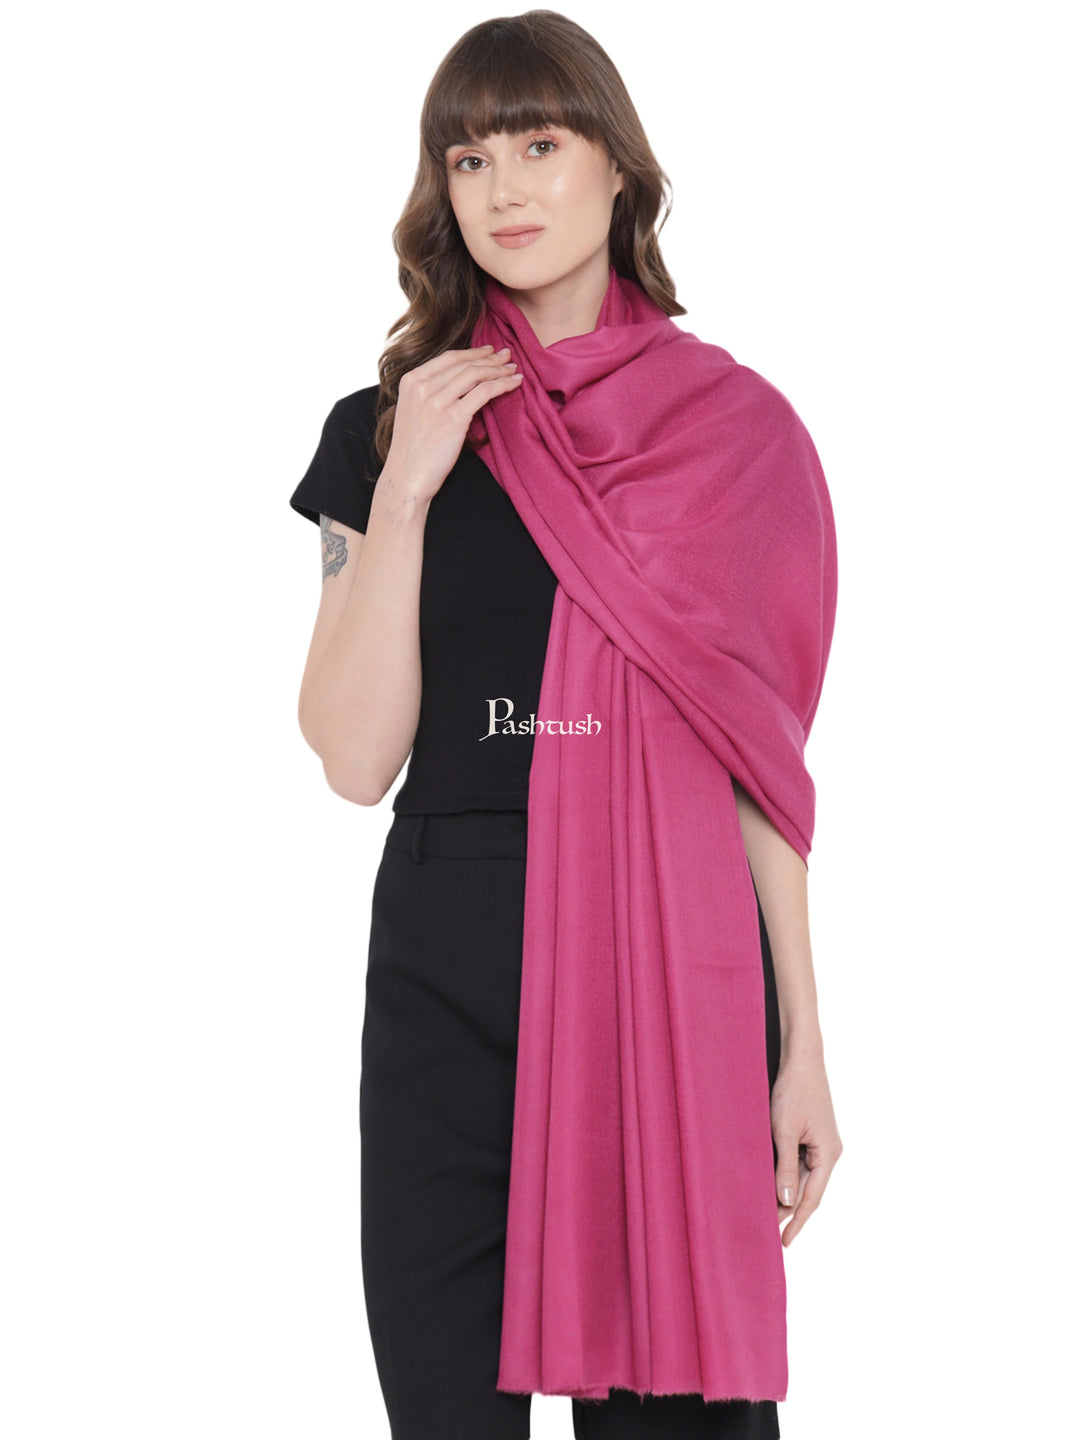 Pashtush India Womens Shawls Pashtush Womens Fine Wool Shawl, Extra Soft, Basics Solid, Fuschia